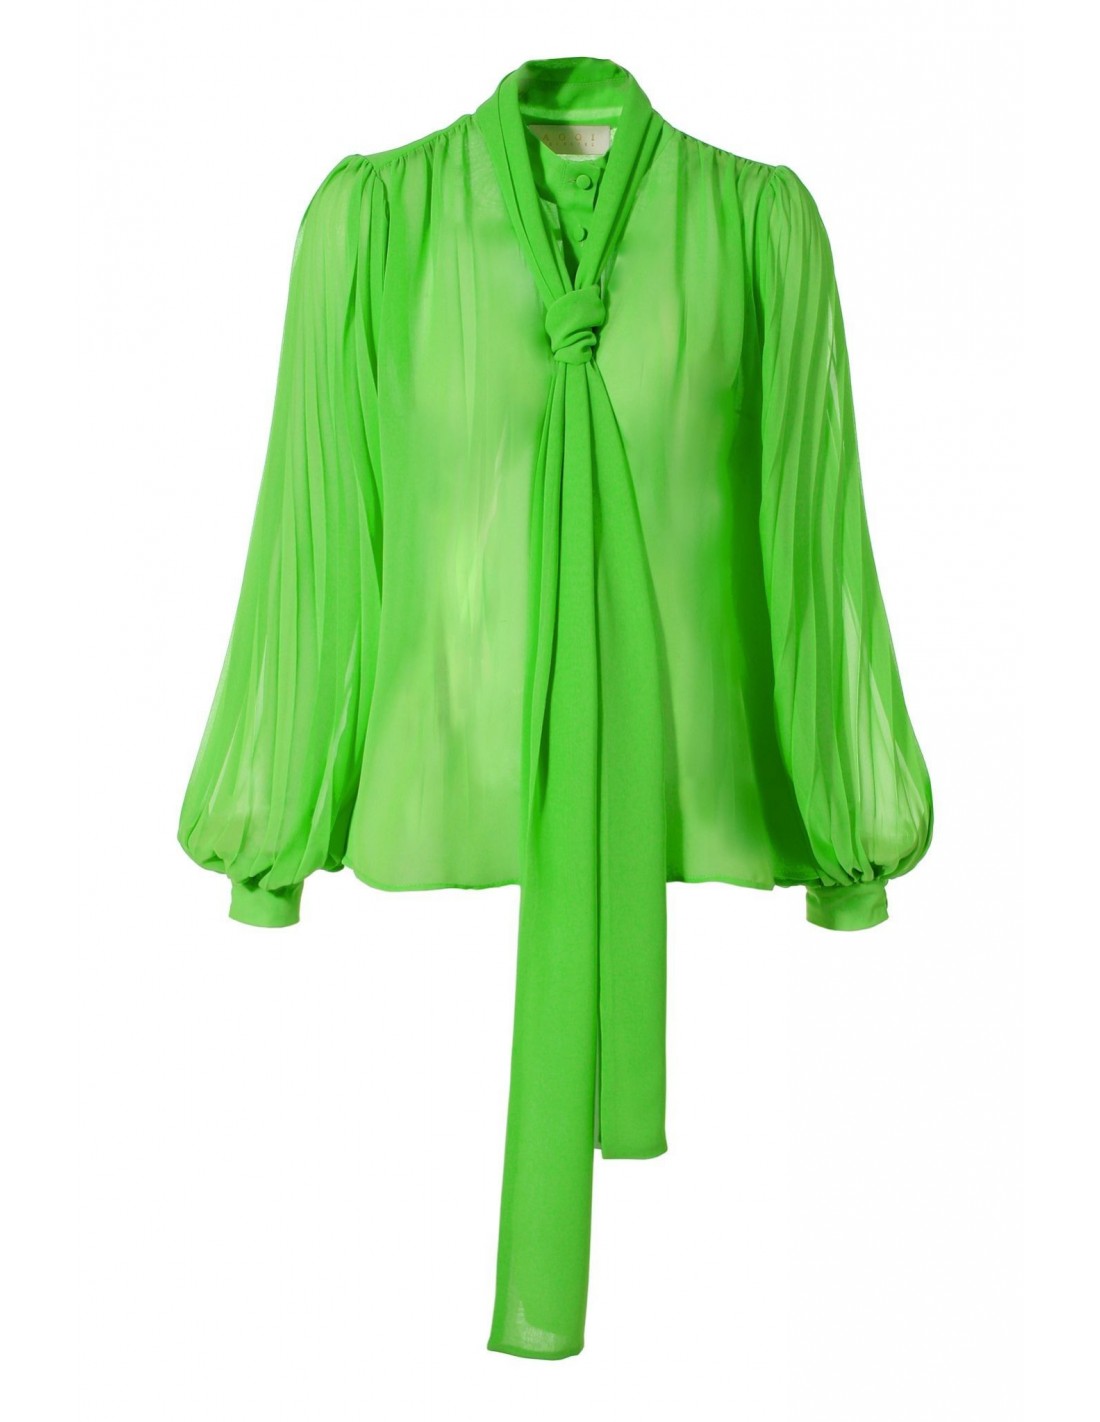 Green chiffon blouse with voluminous sleeves | INVITADISIMA Colours ...